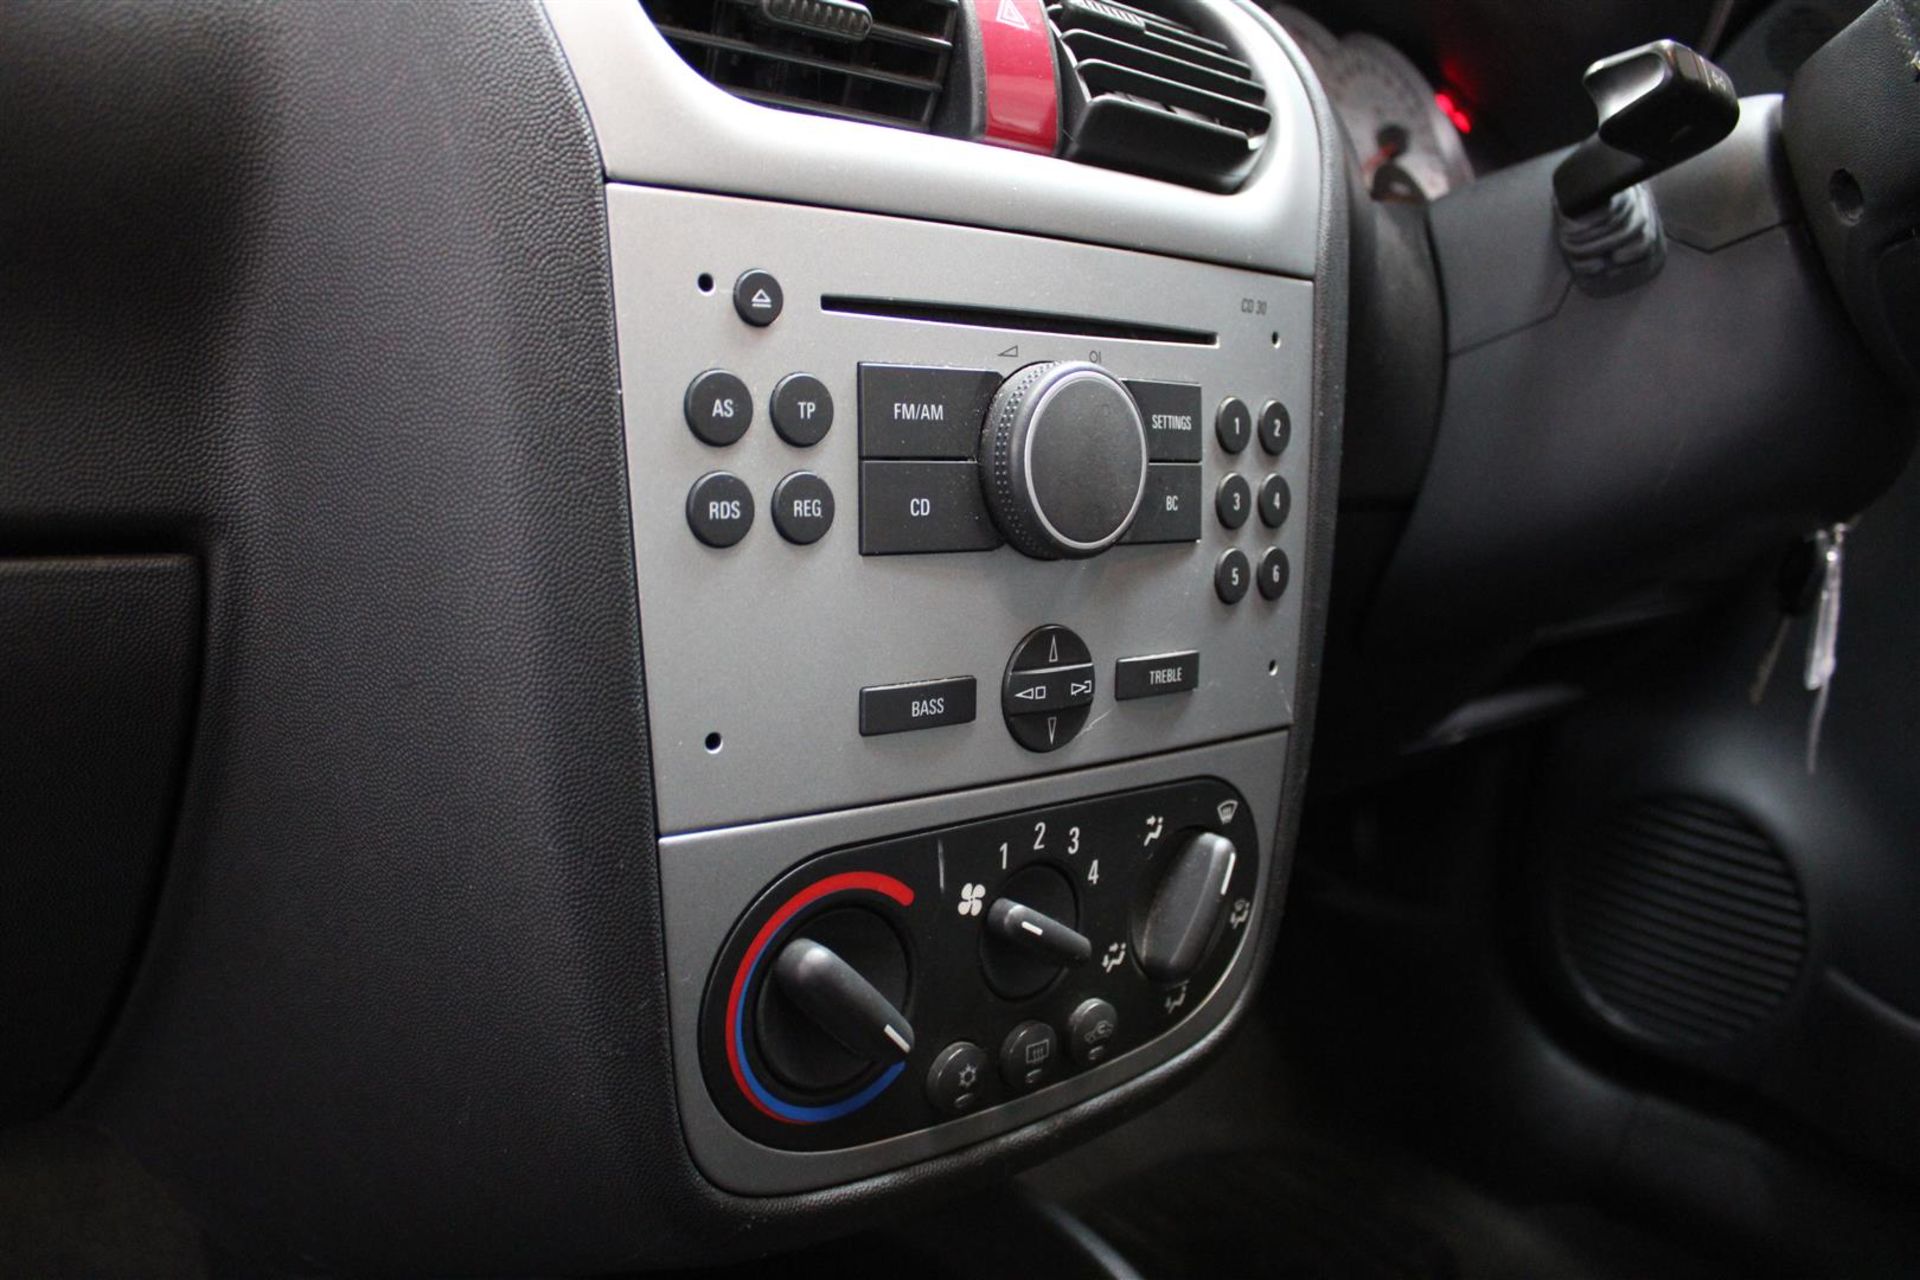 06 06 Vauxhall Corsa SXI + - Image 12 of 29